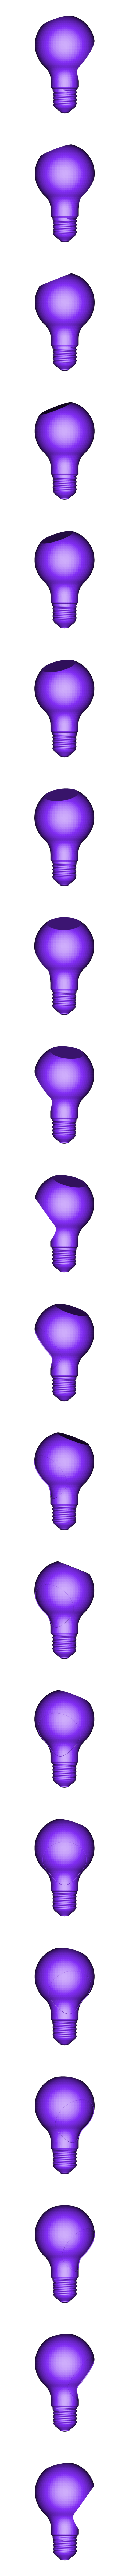 JX bulb.STL Download STL file Bulb Pot • 3D printer object, Dekro